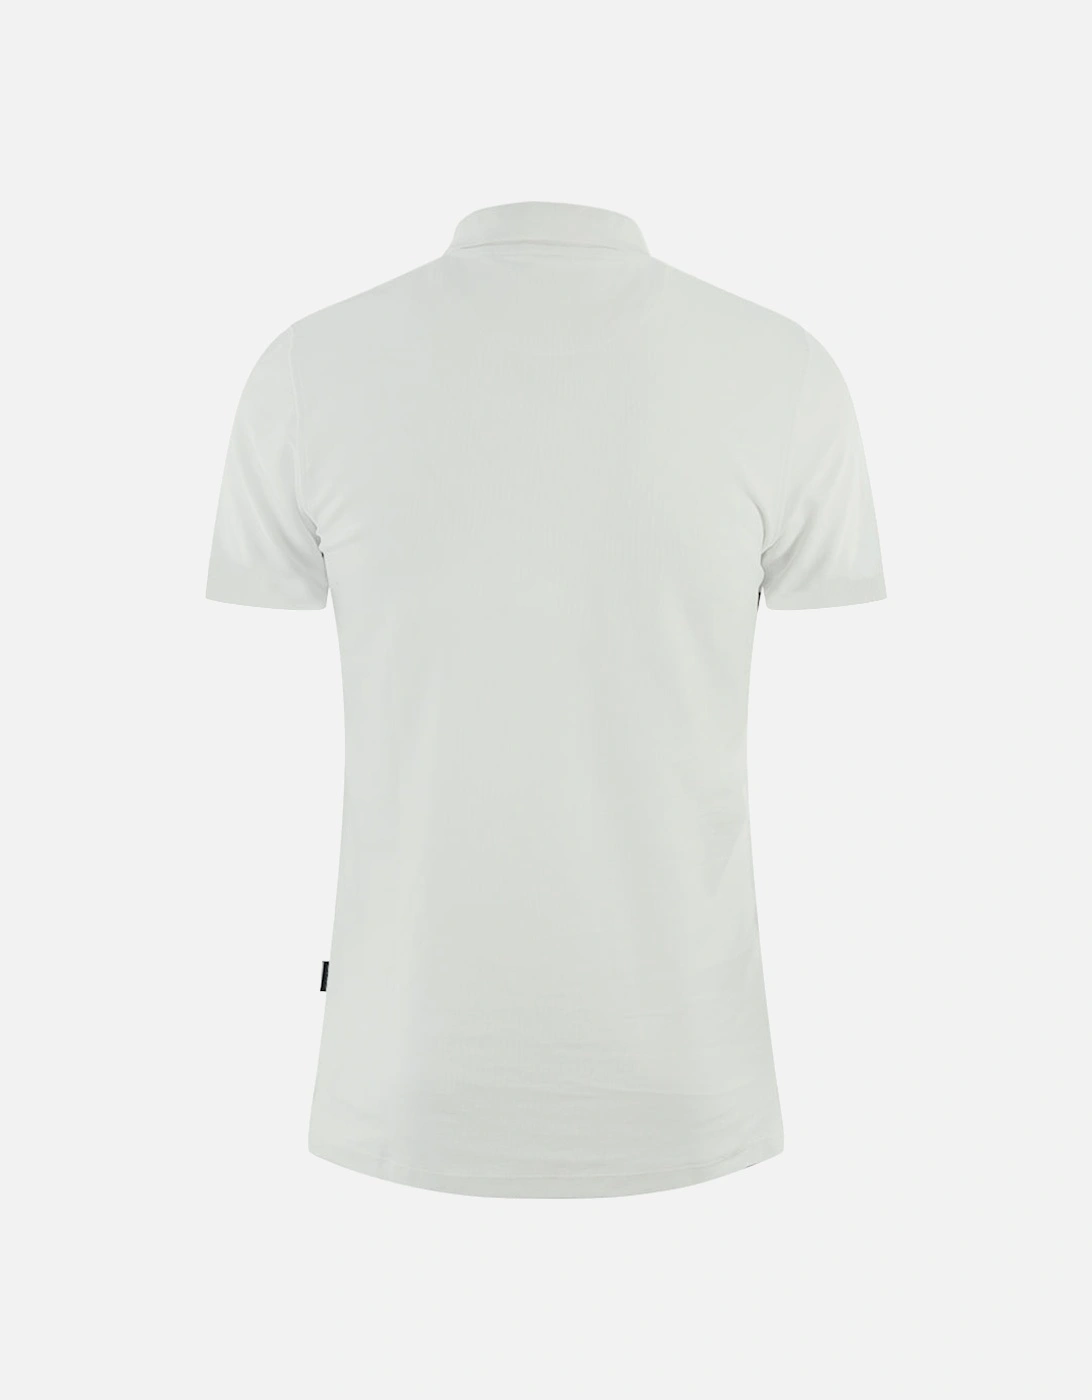 London Classic White Polo Shirt